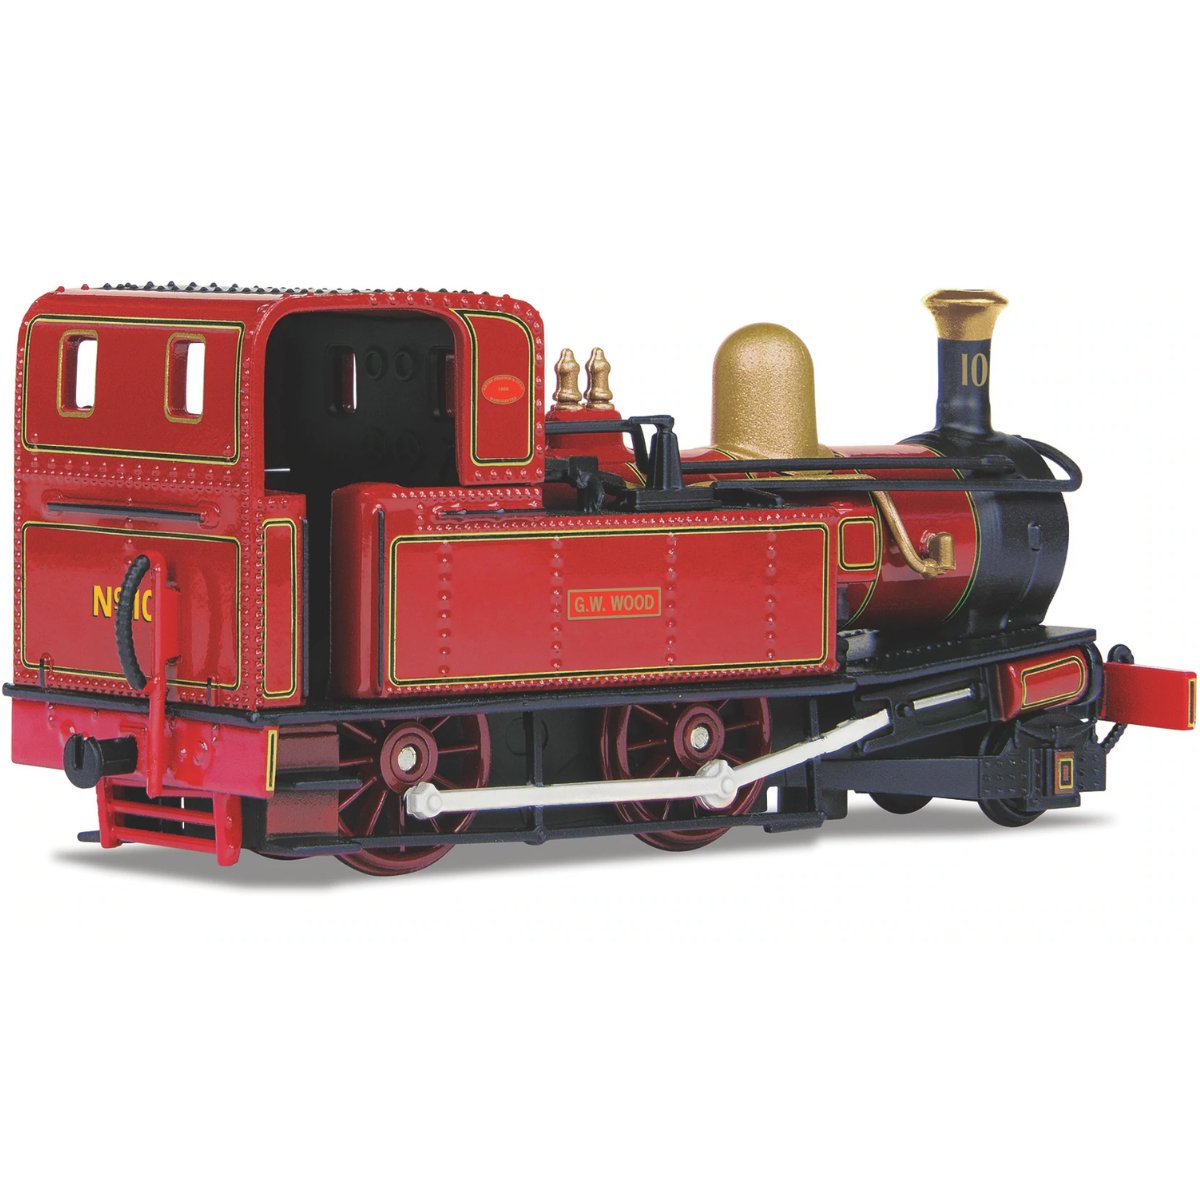 Oxford Rail IOM Railways No.10 G H Wood Indian Red - Static Model - Phillips Hobbies